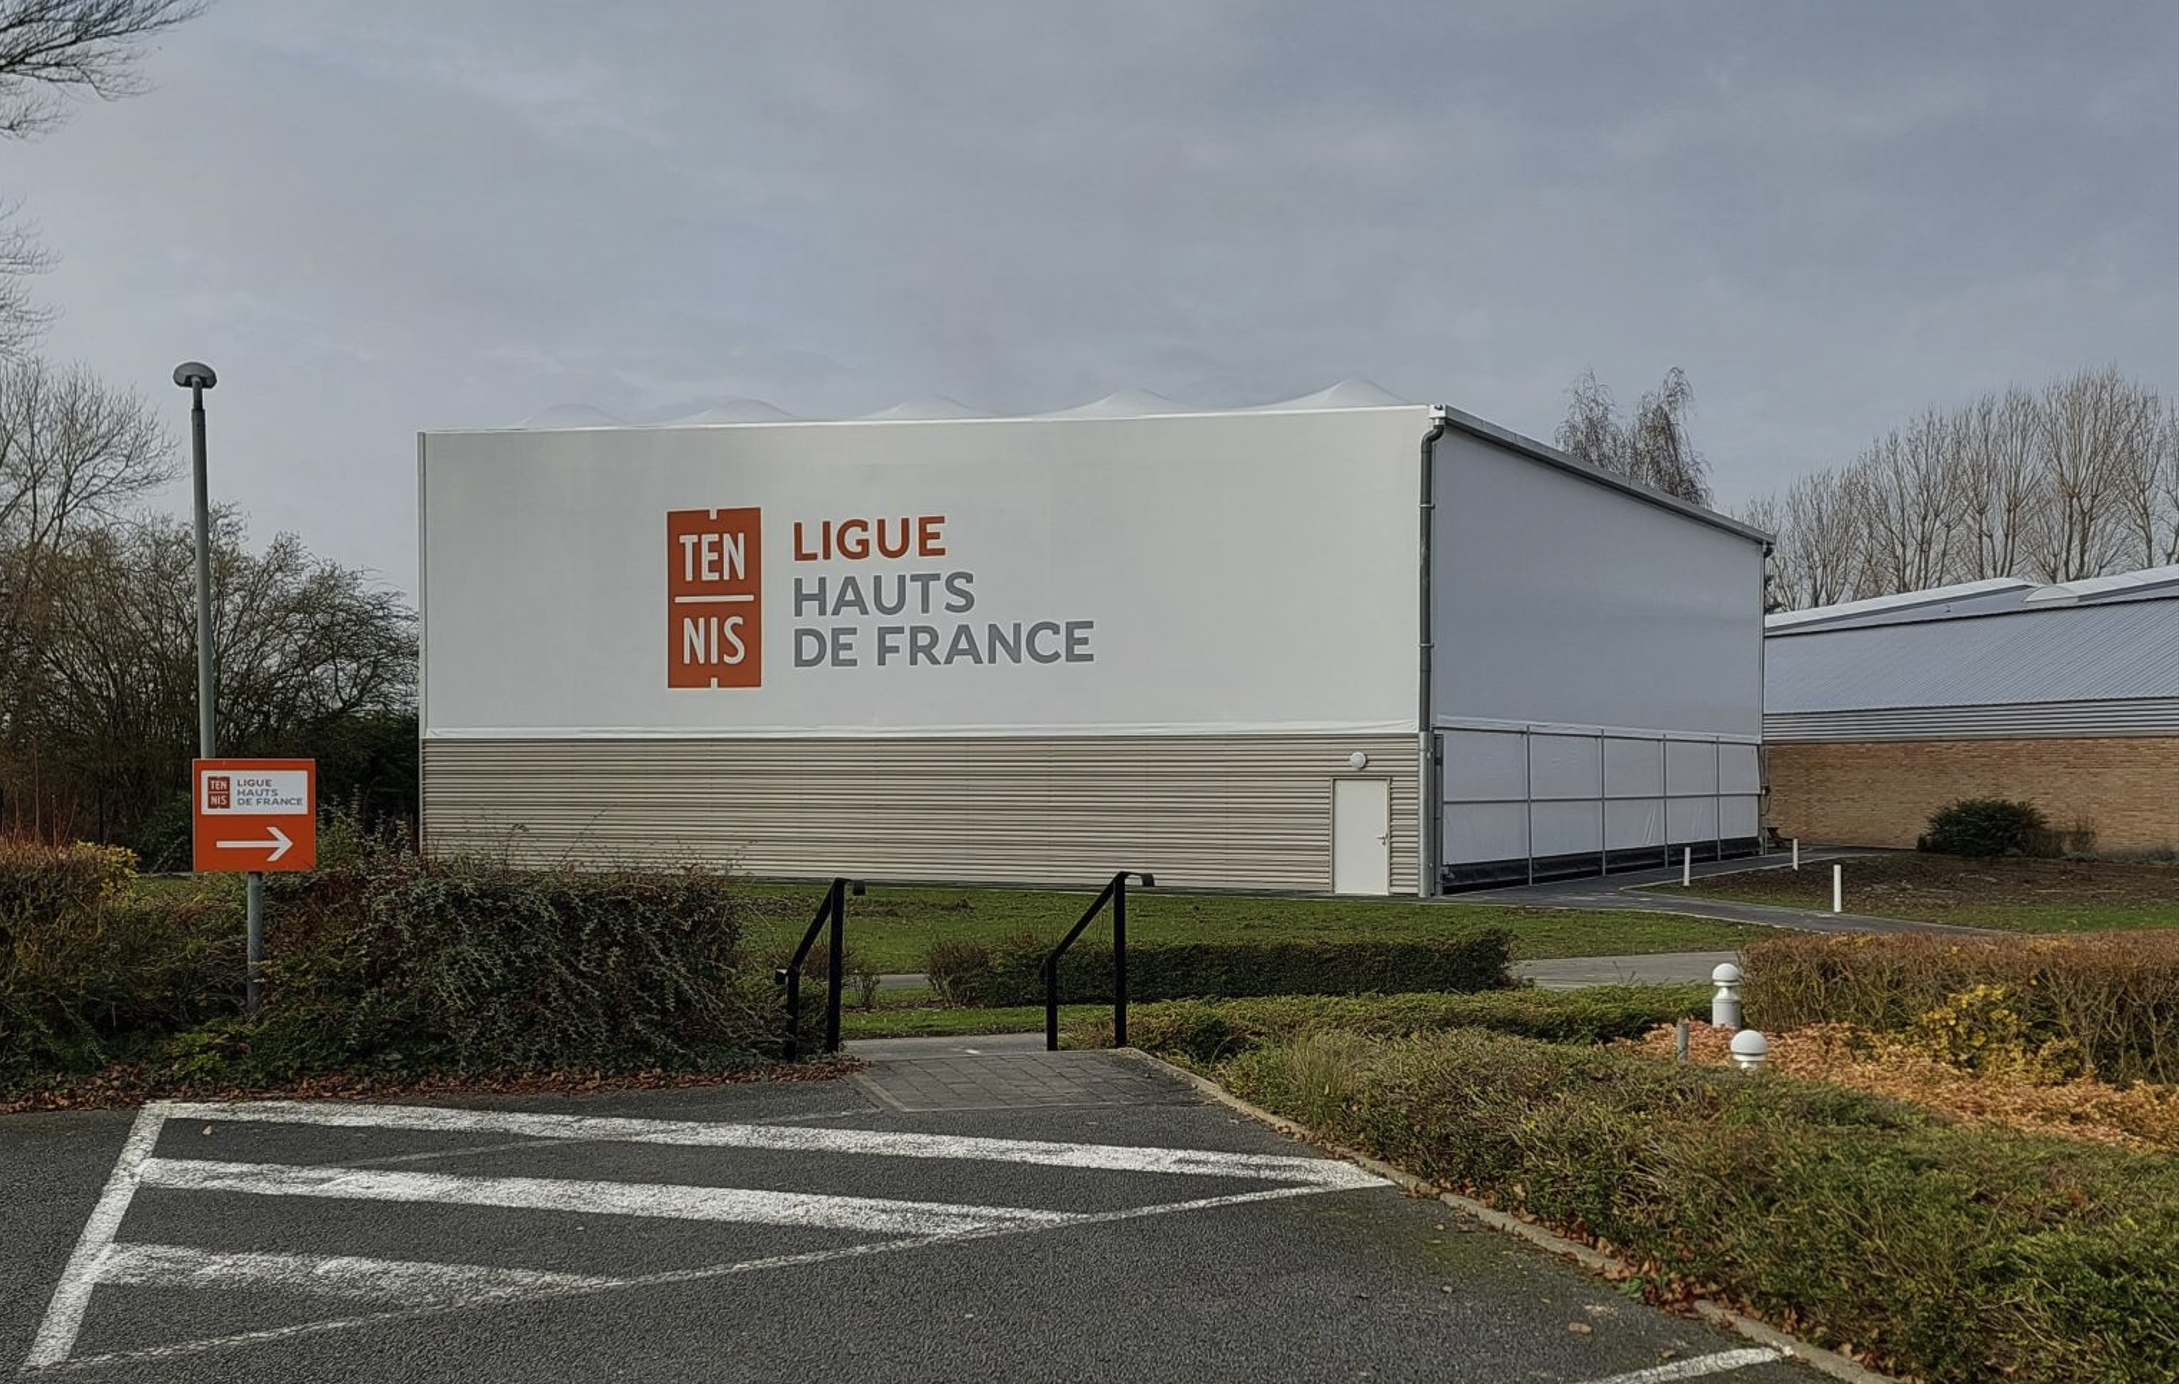 Hauts-de-France League har 2 padel inomhus-